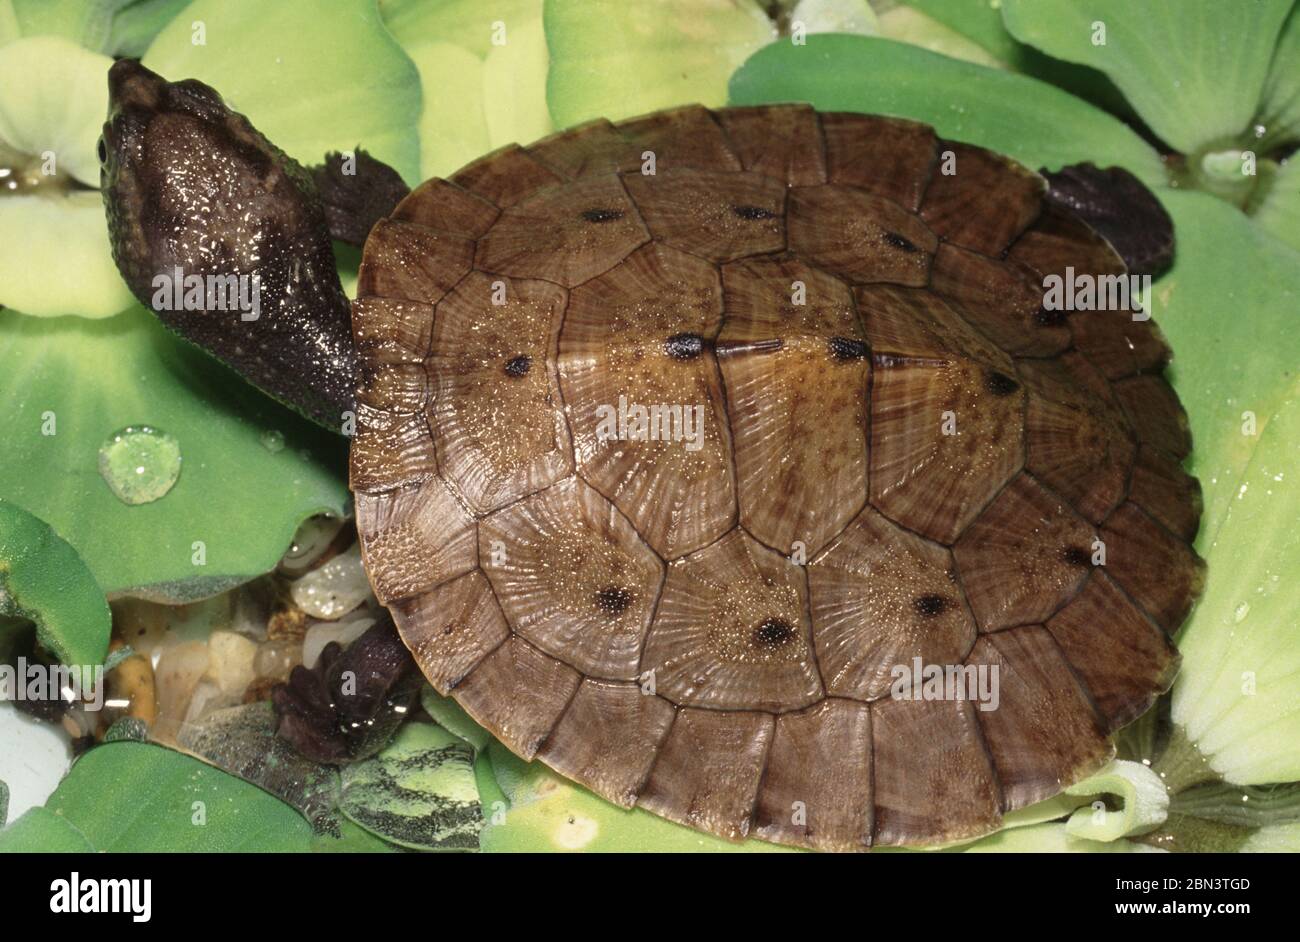 New Guinea Snapping Turtle, Elseya novaeguineae Stock Photo